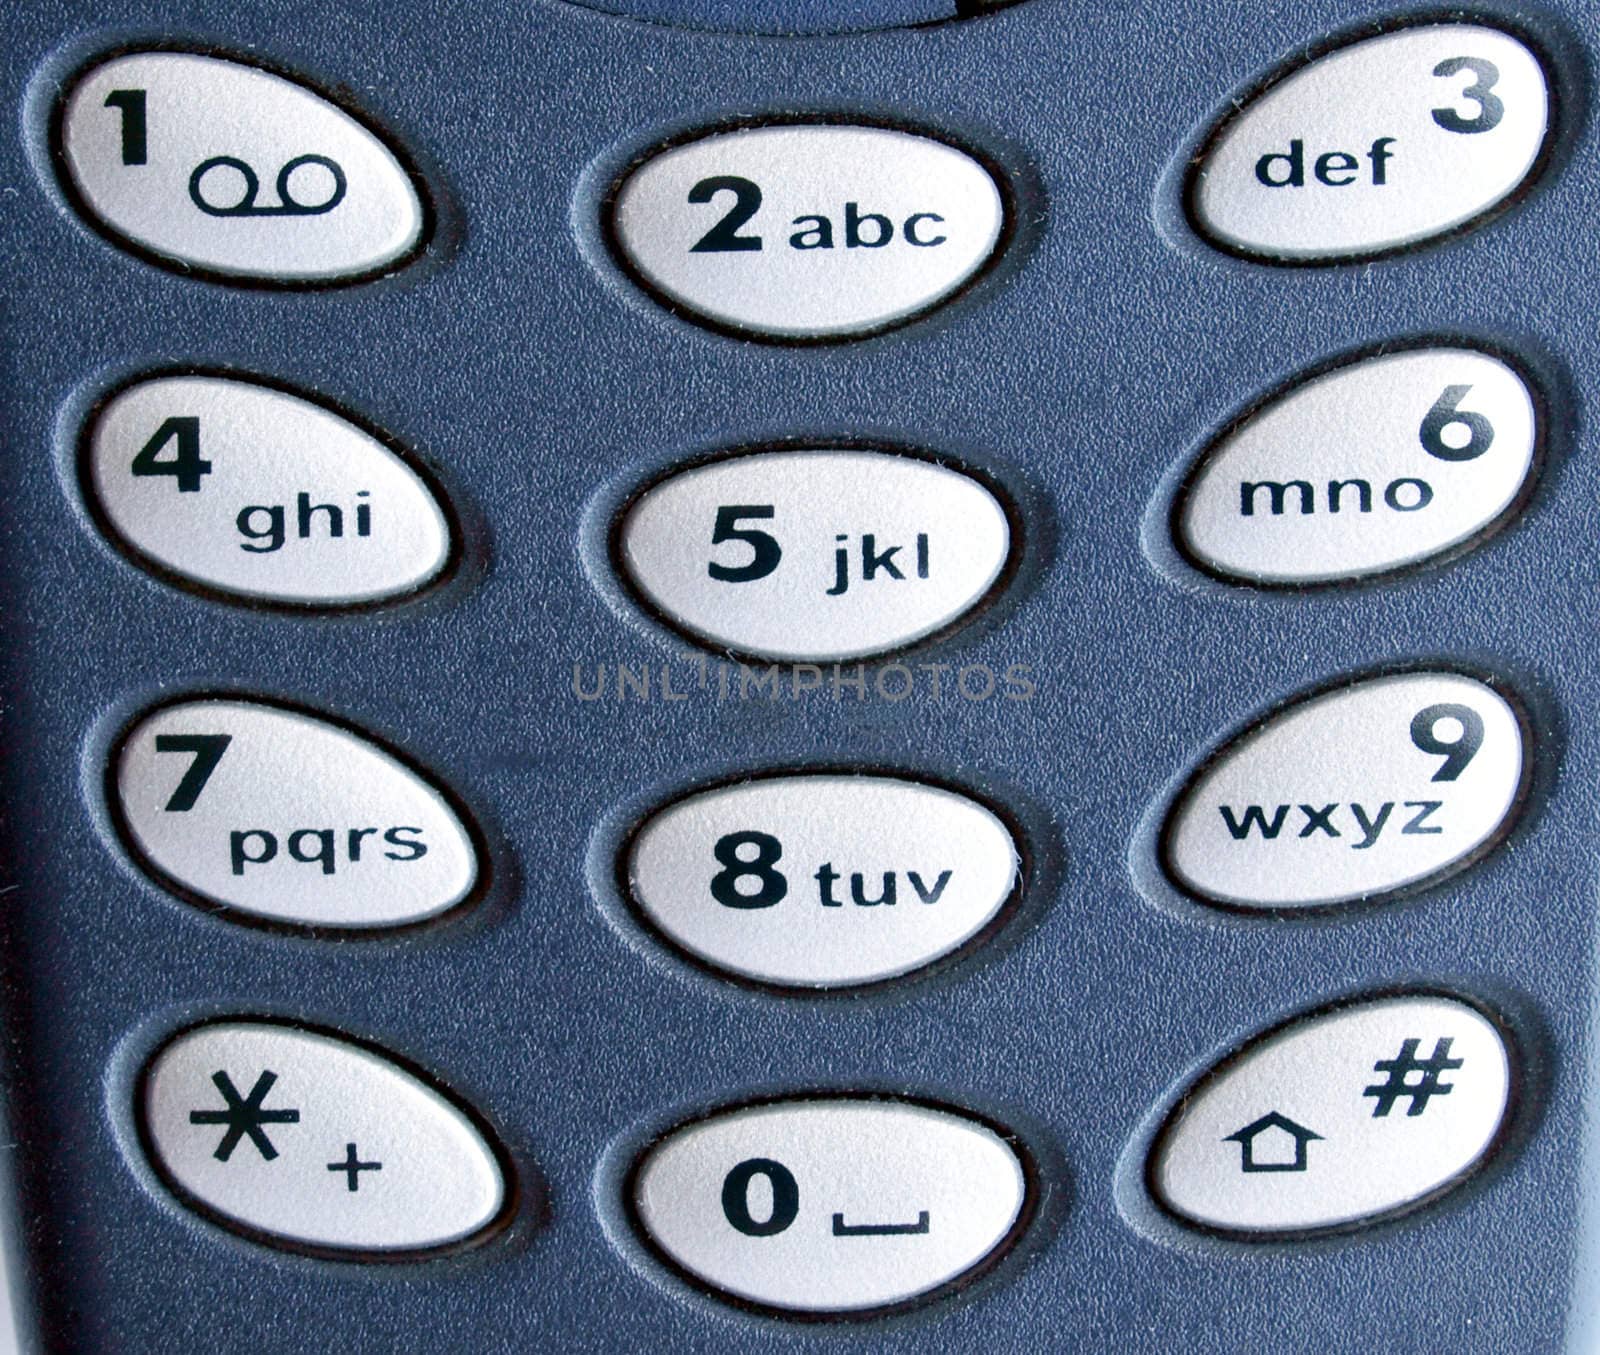 Detail of mobile phone keypad